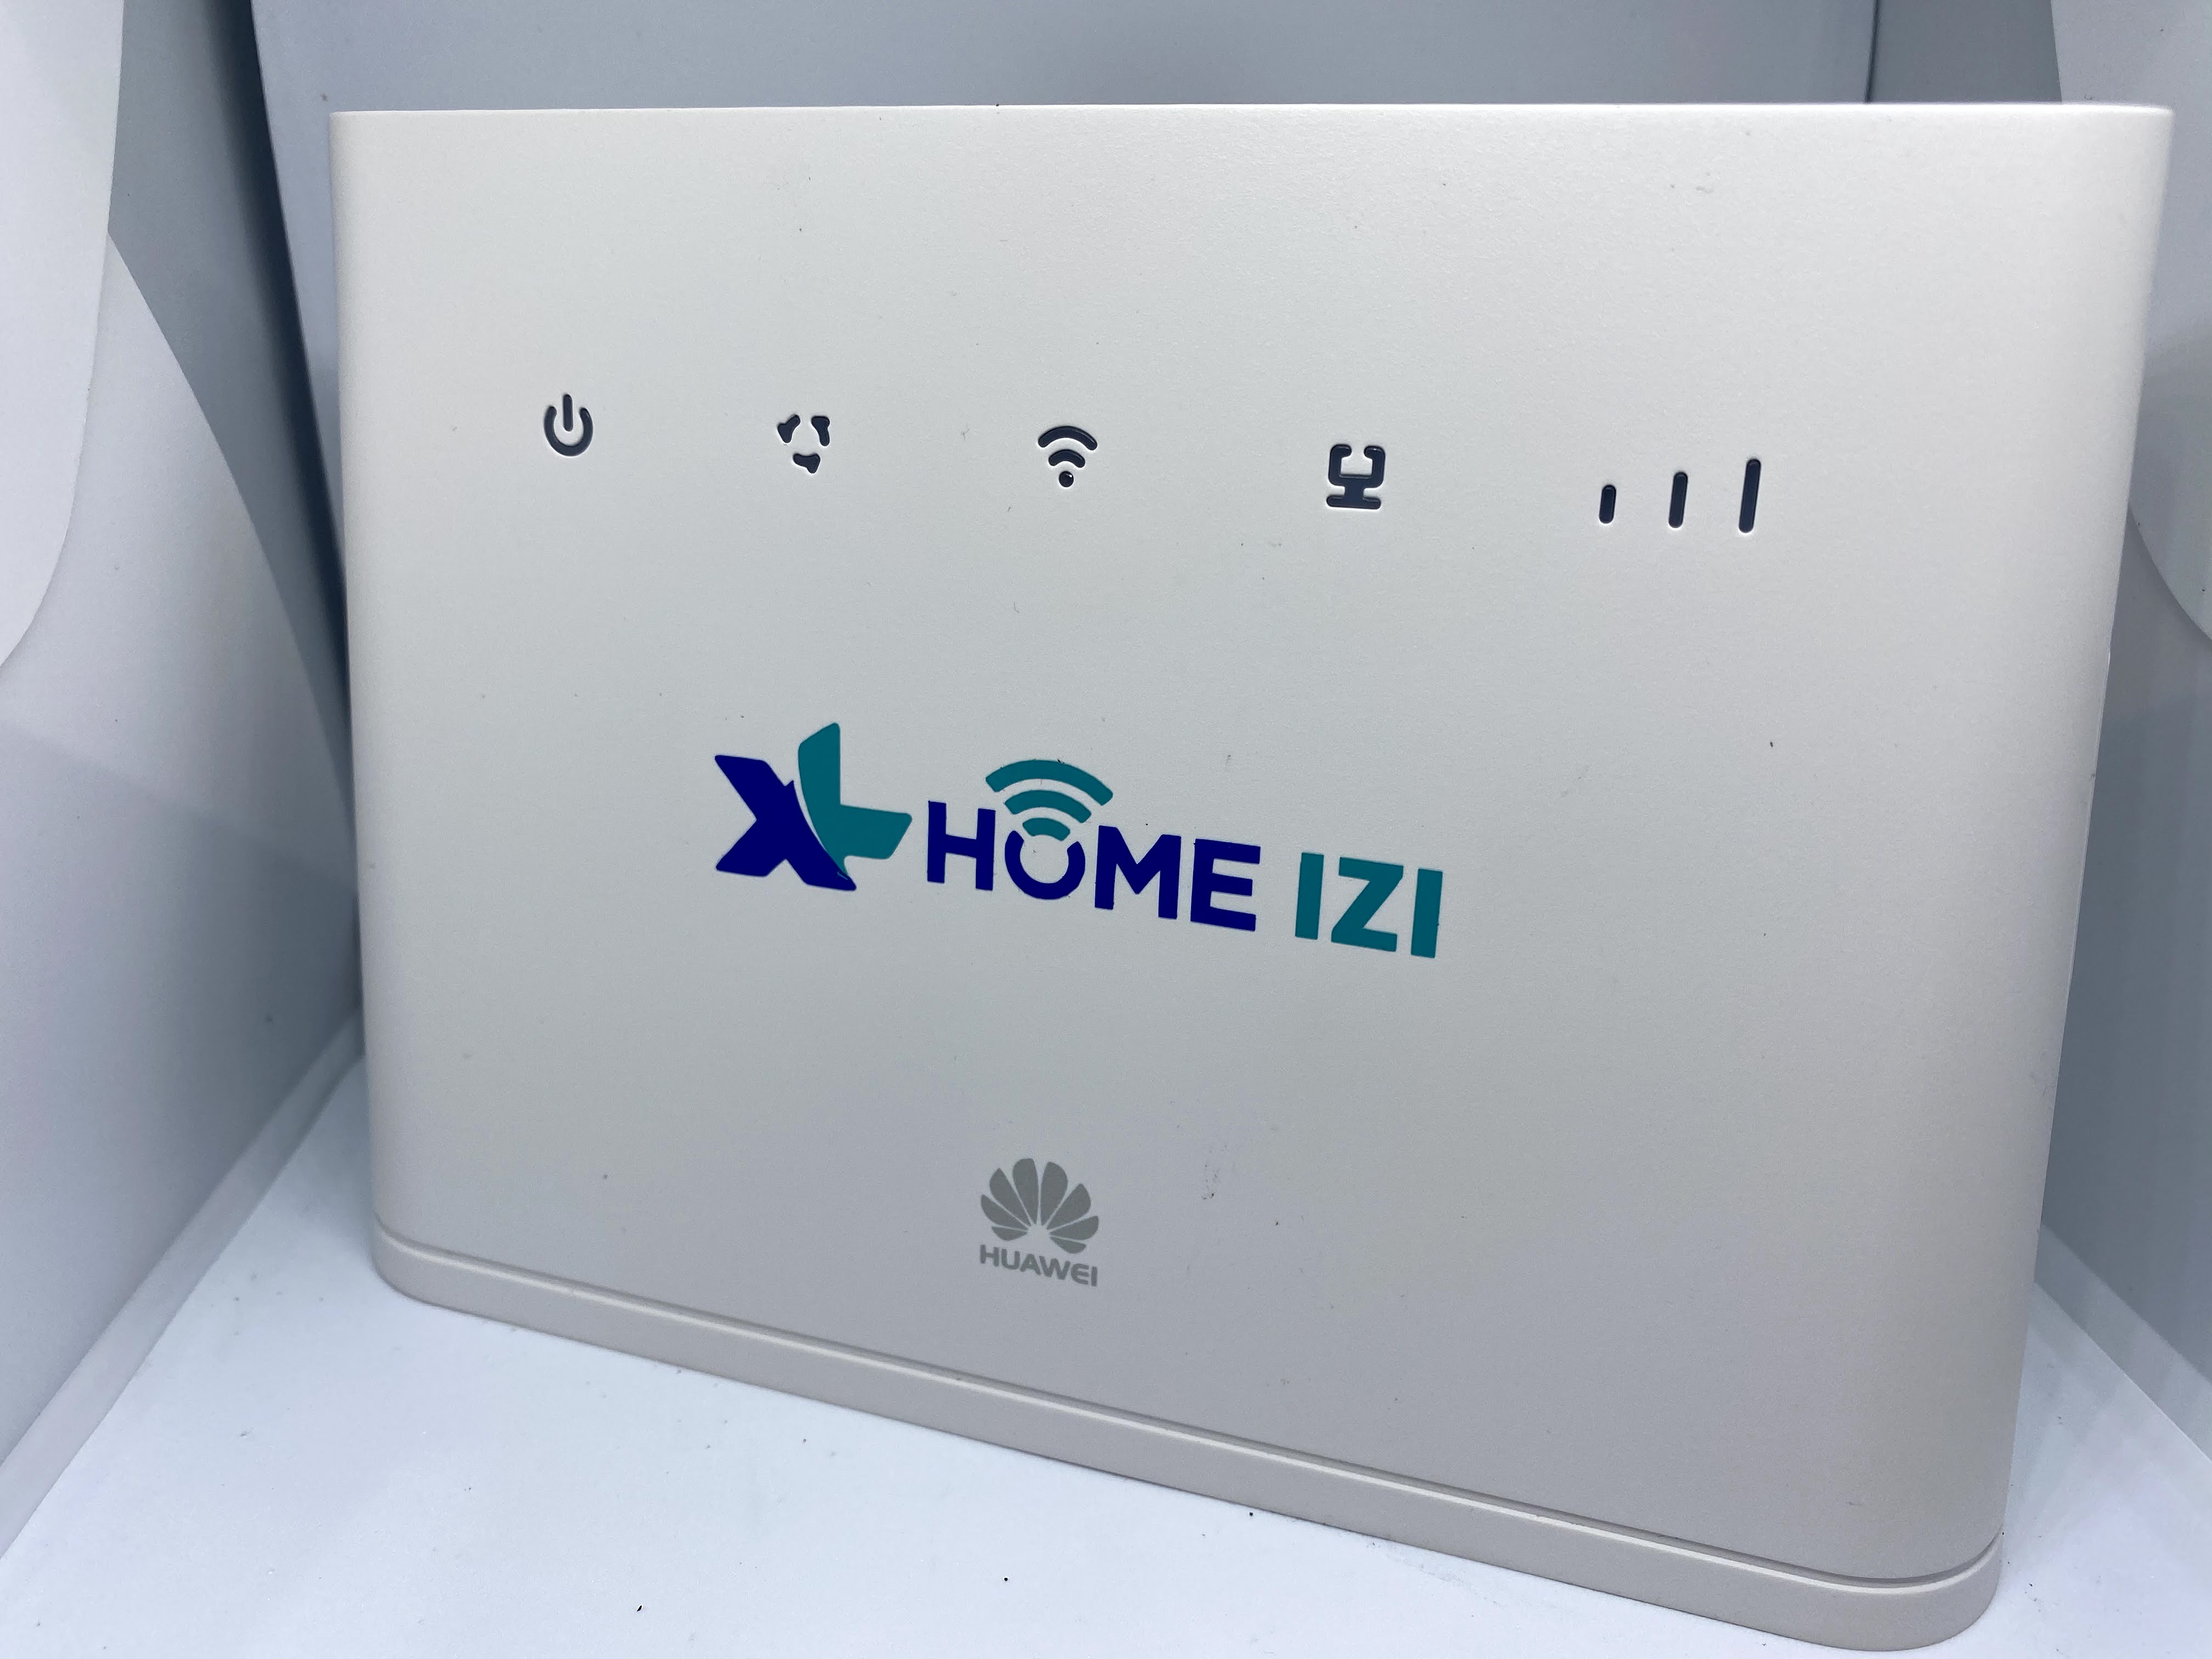 review XL HOME IZI